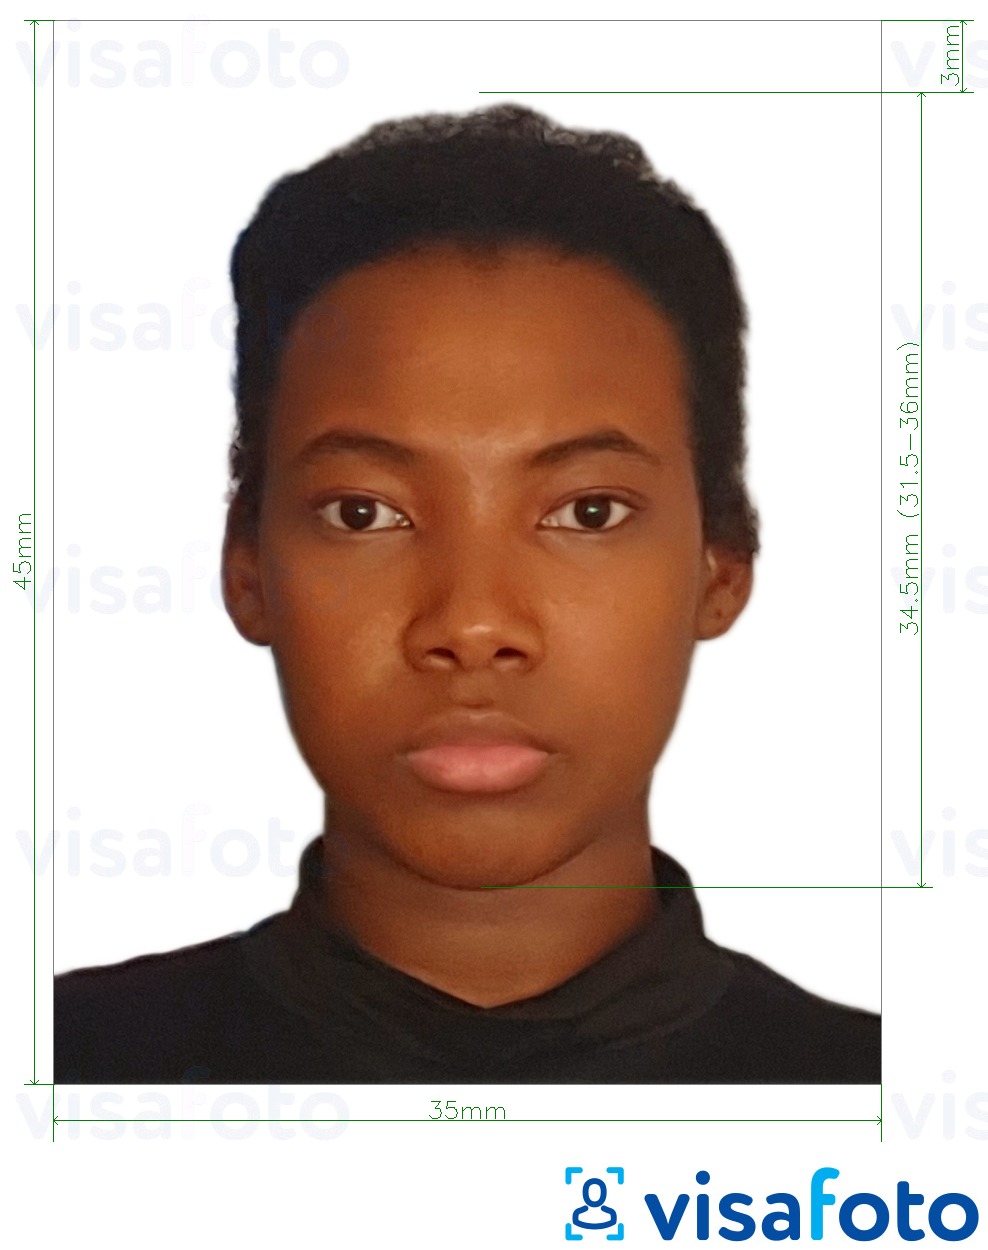 Contoh foto untuk Pasport Republik Demokratik Congo 35x45 mm (3.5x4.5 cm) dengan spesifikasi saiz yang tepat.